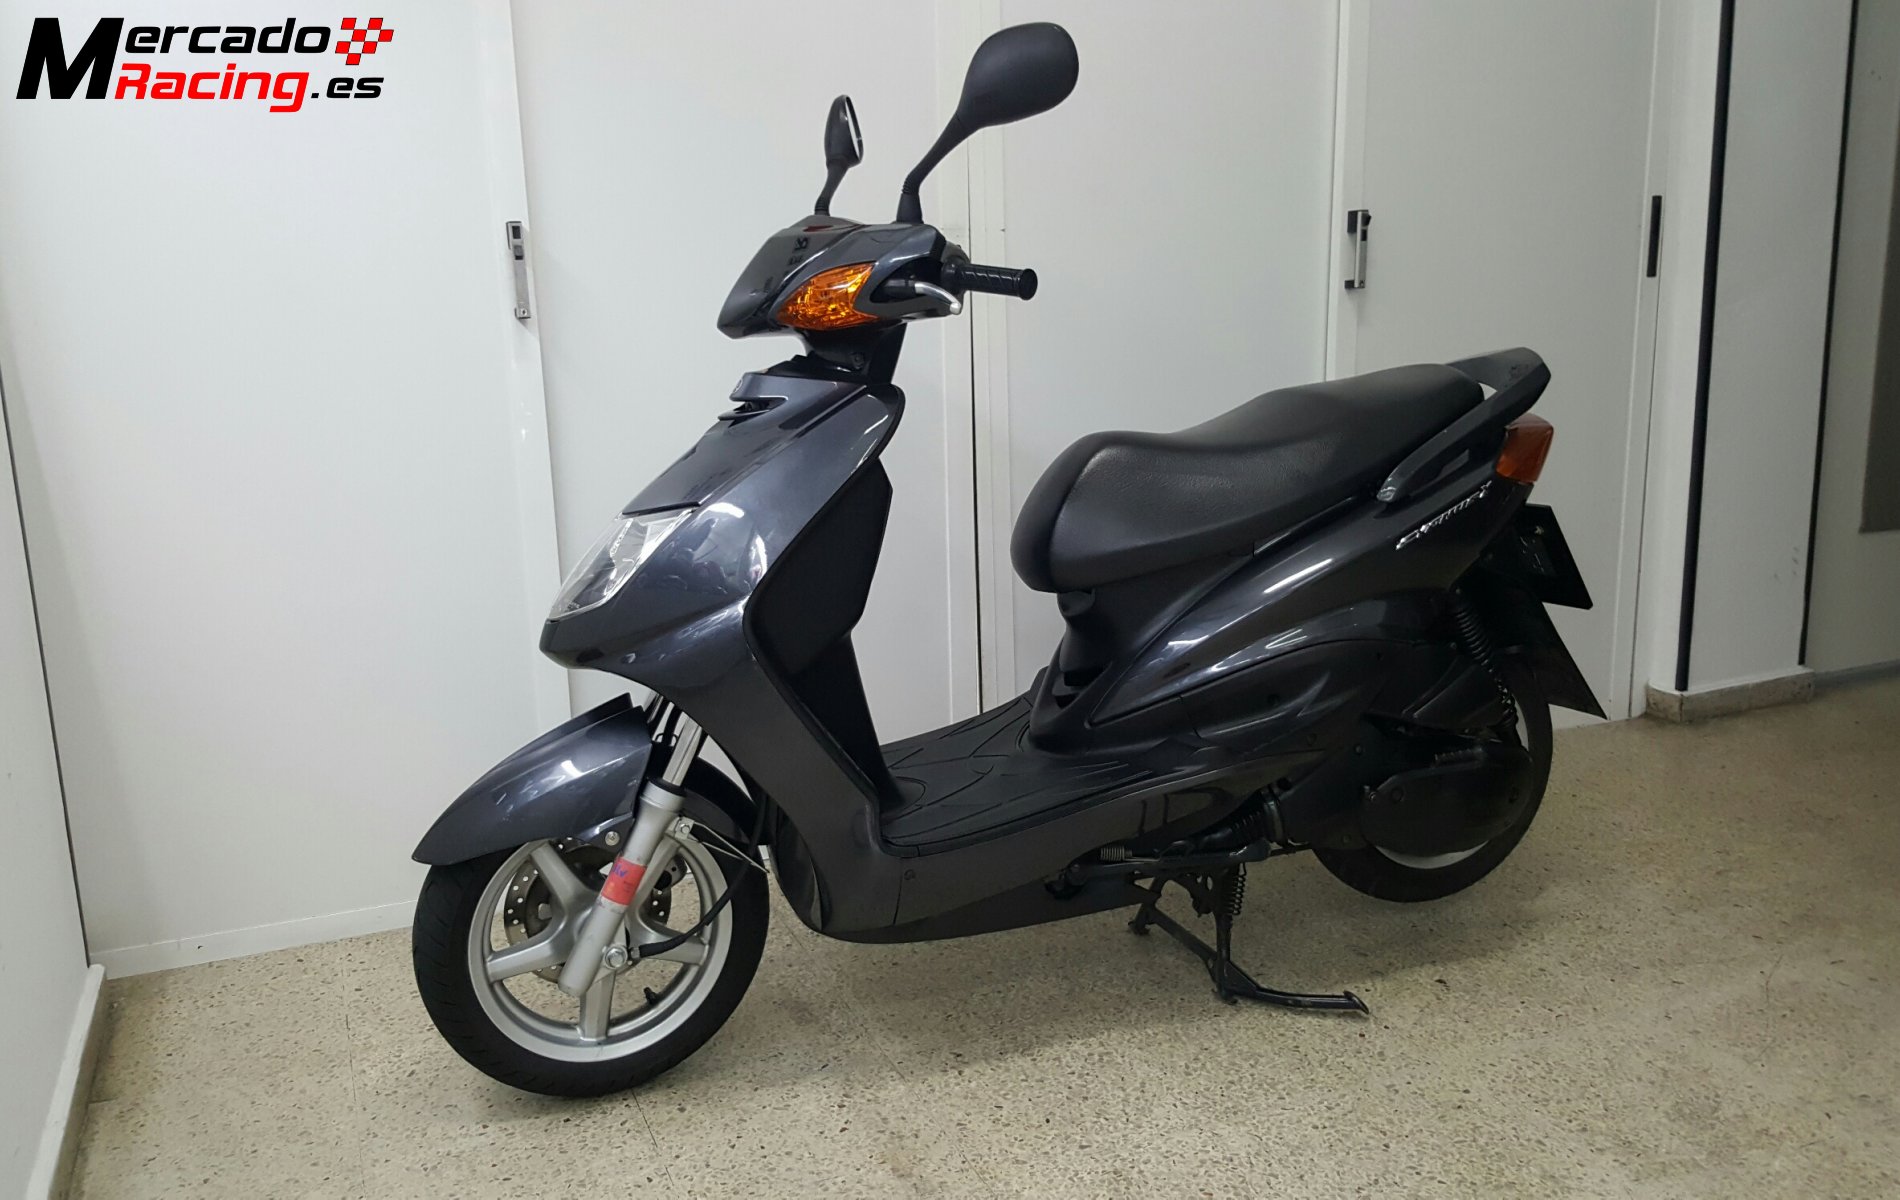 Yamaha cignus 125 2007 1300 euros